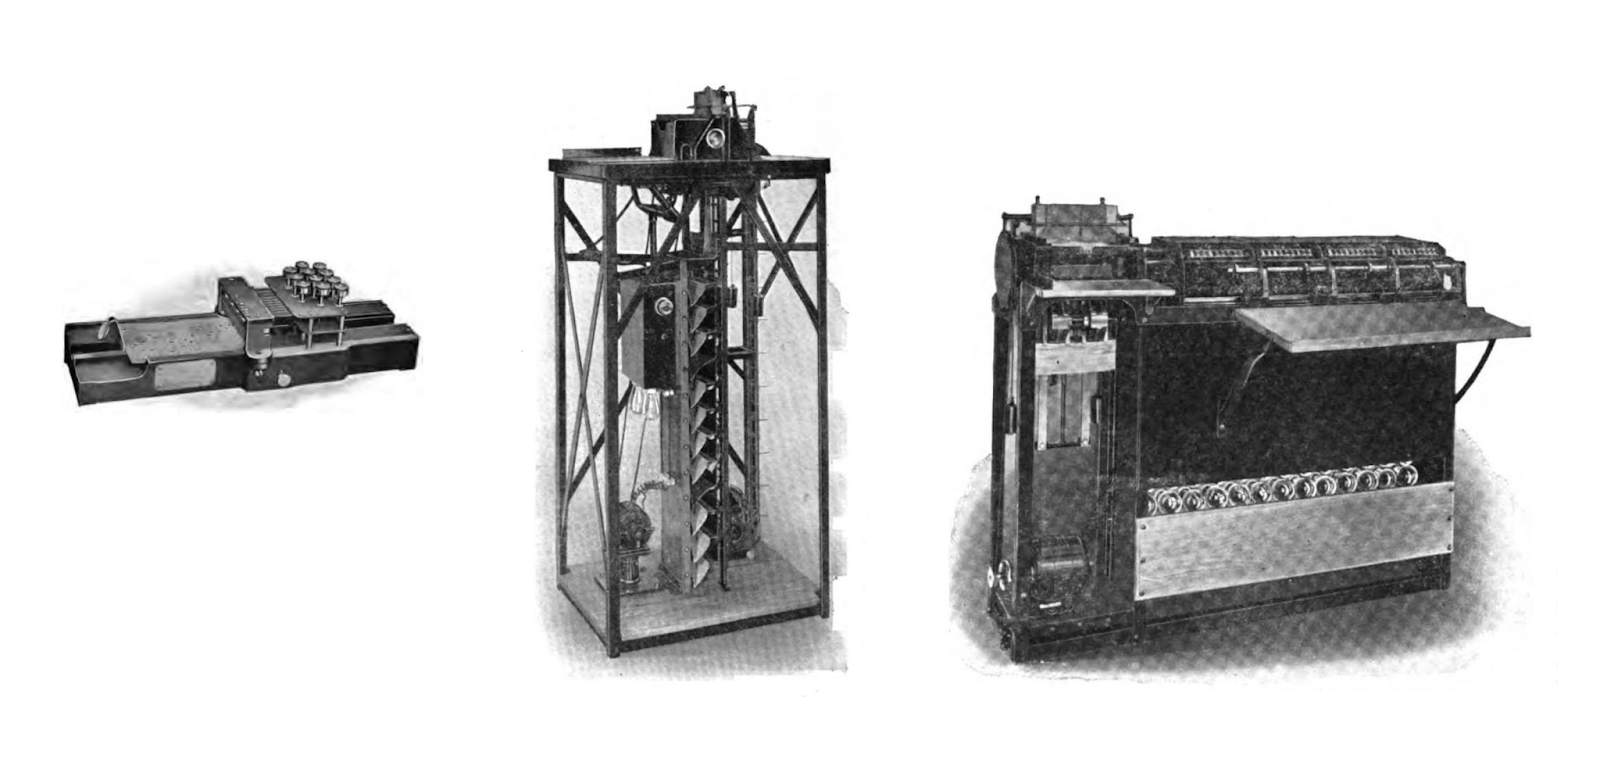 Машины Computing-Tabulating-Recording Company (фото из книг Book-keeping by machinery, 1906 год, и Graphic methods for presenting facts, 1914 год)